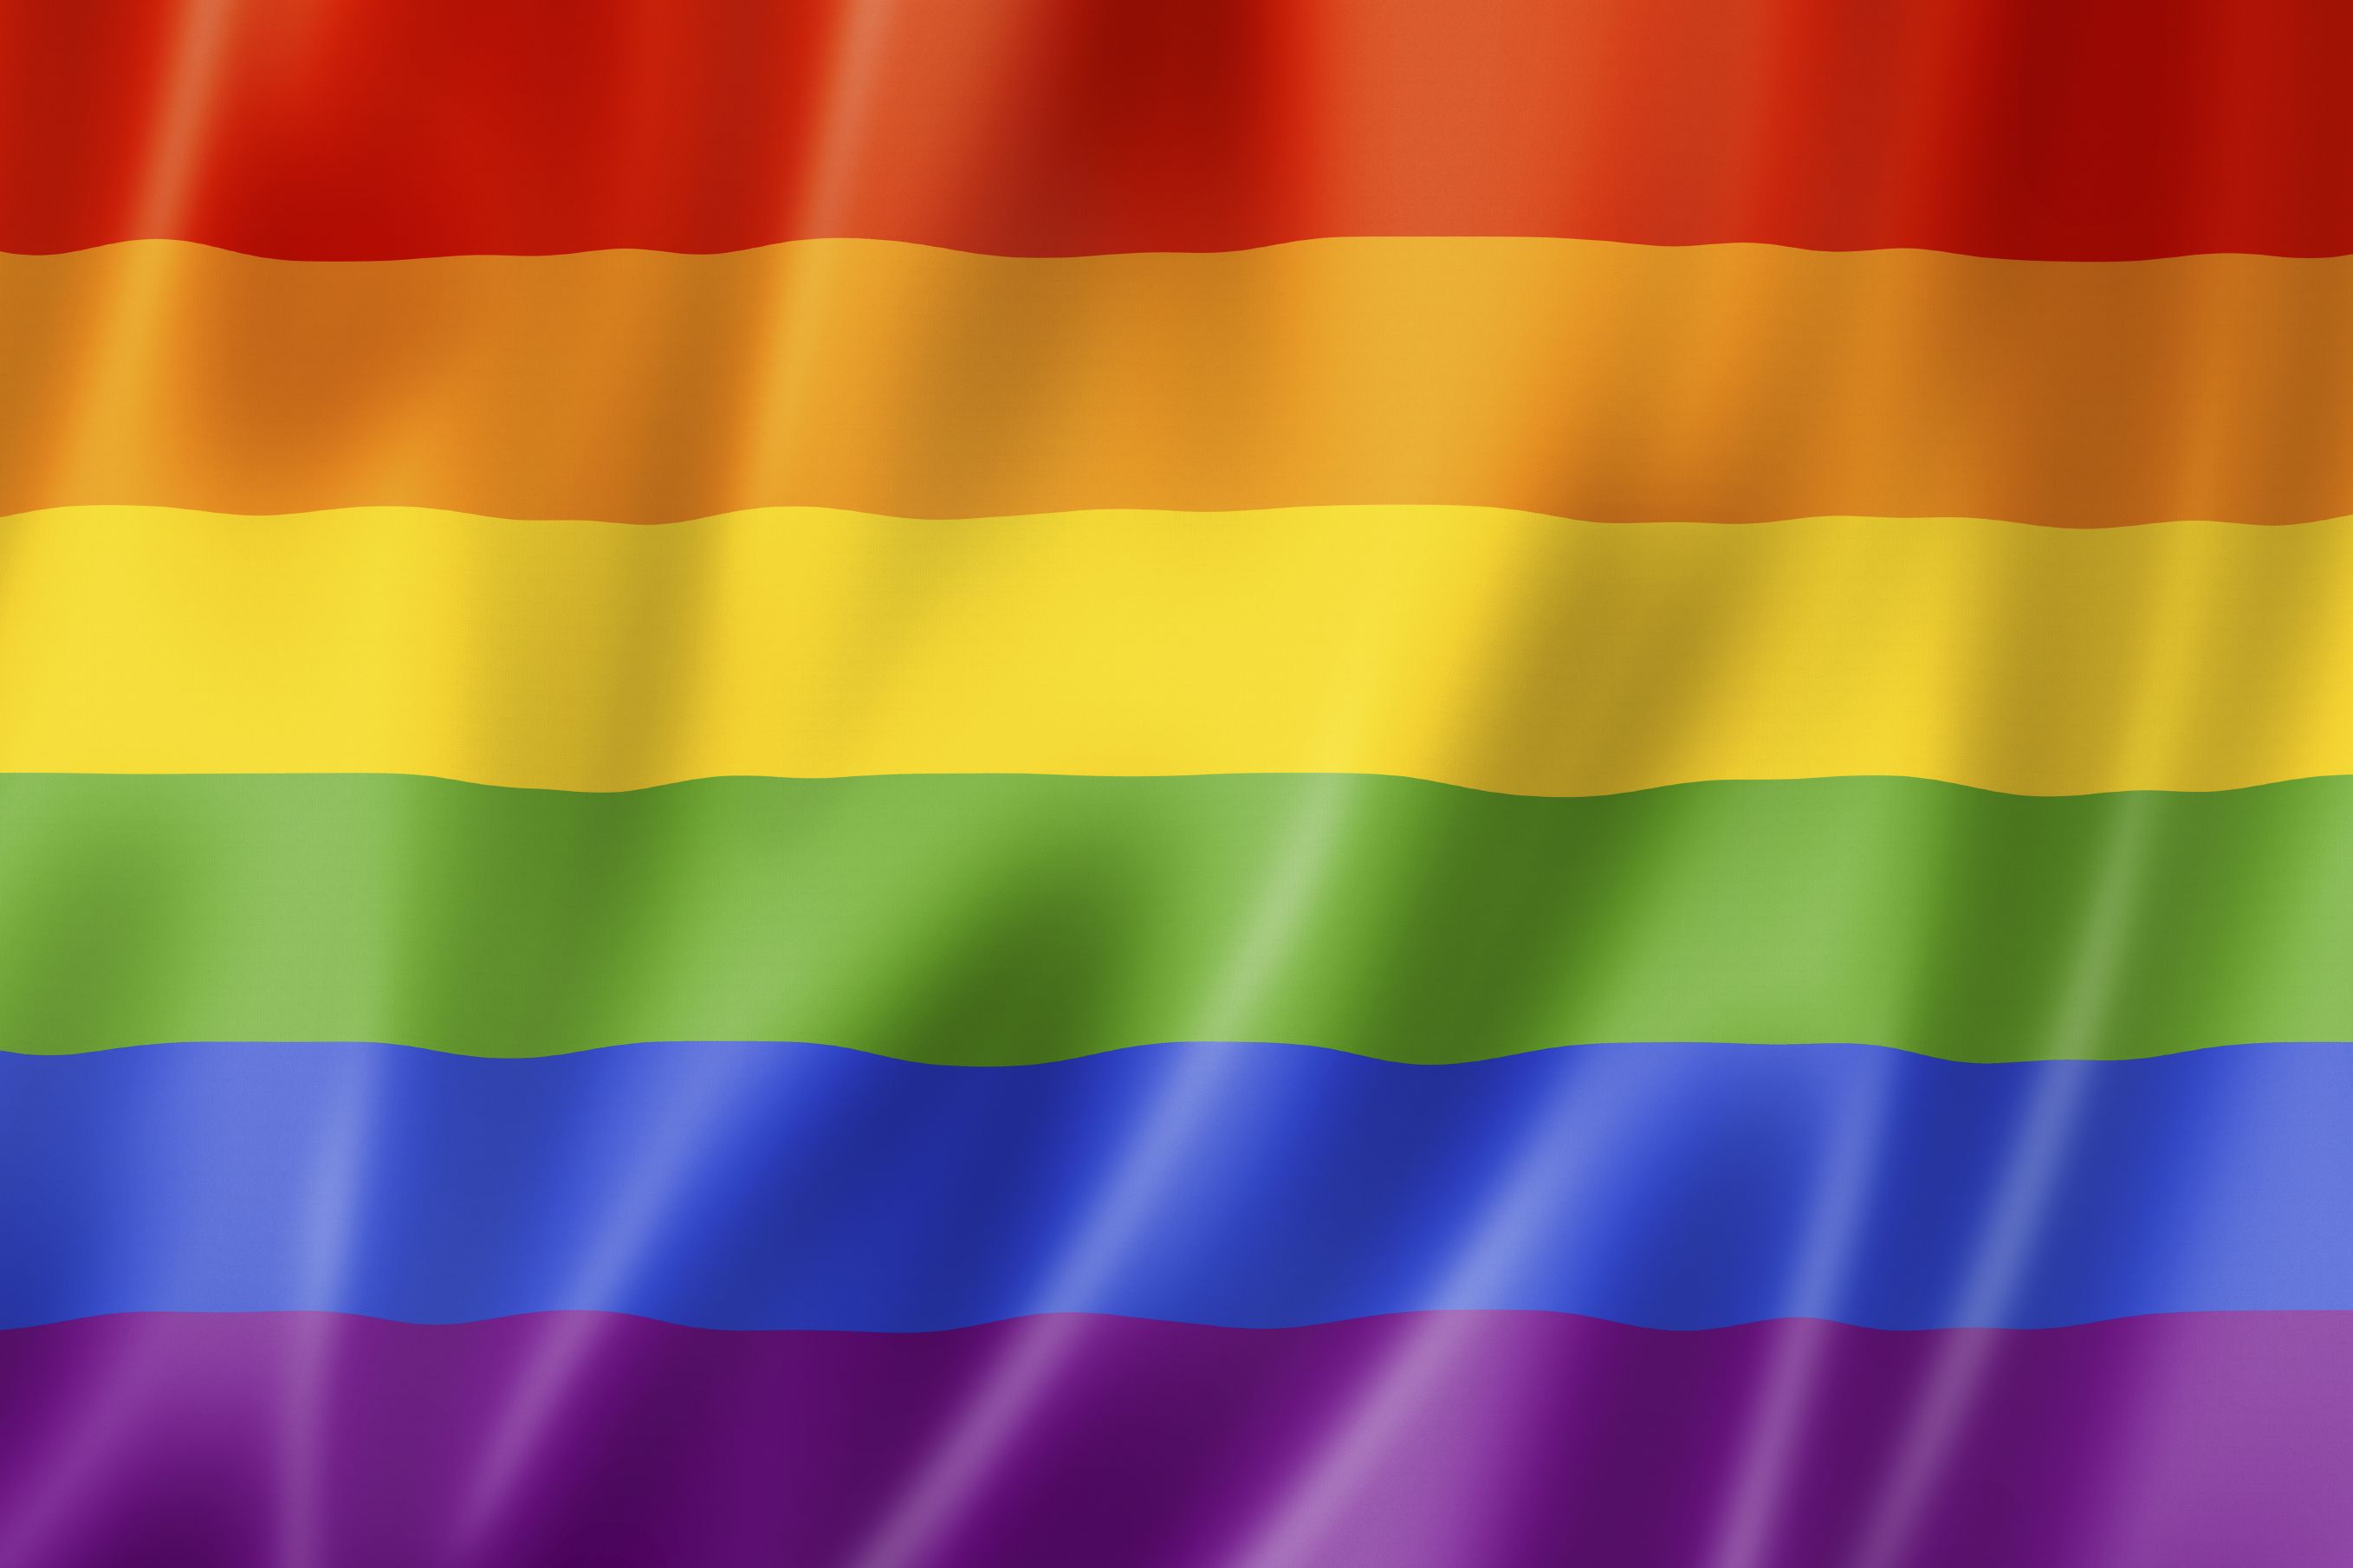 LGBTQ Background. LGBTQ Background, LGBTQ Movement Wallpaper and LGBTQ Rainbow Background